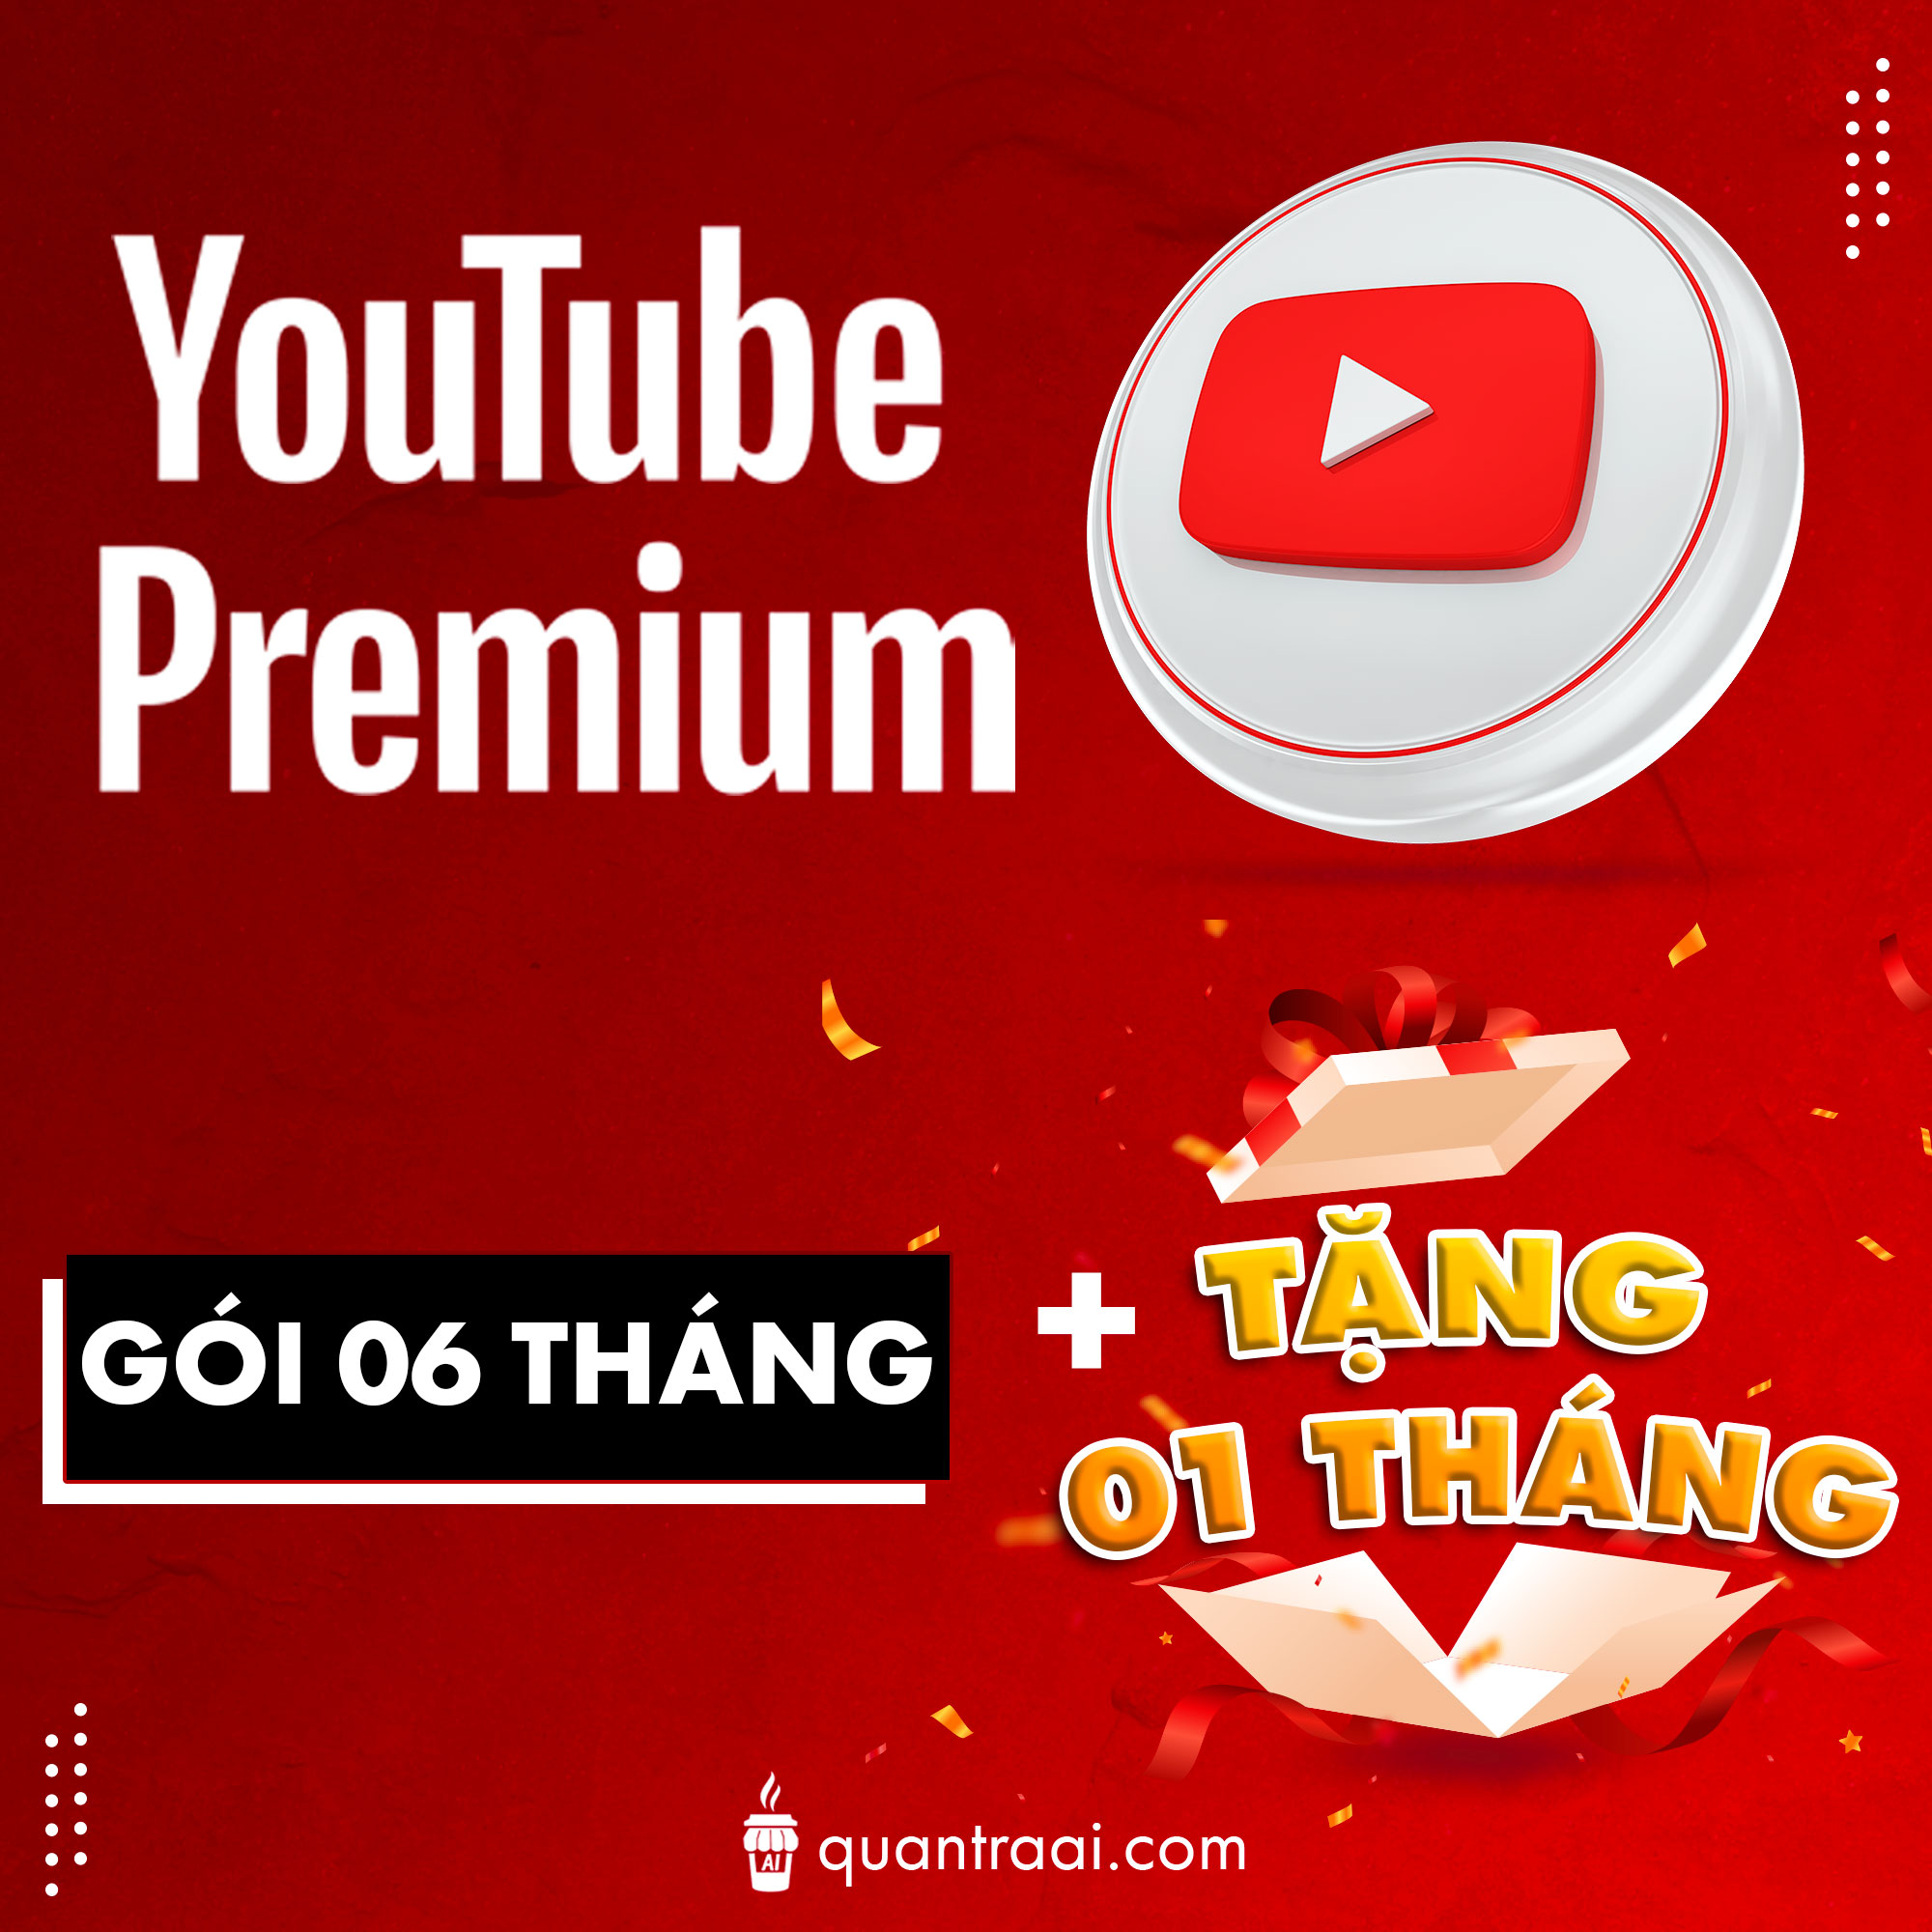 Youtube Premium 06 tháng